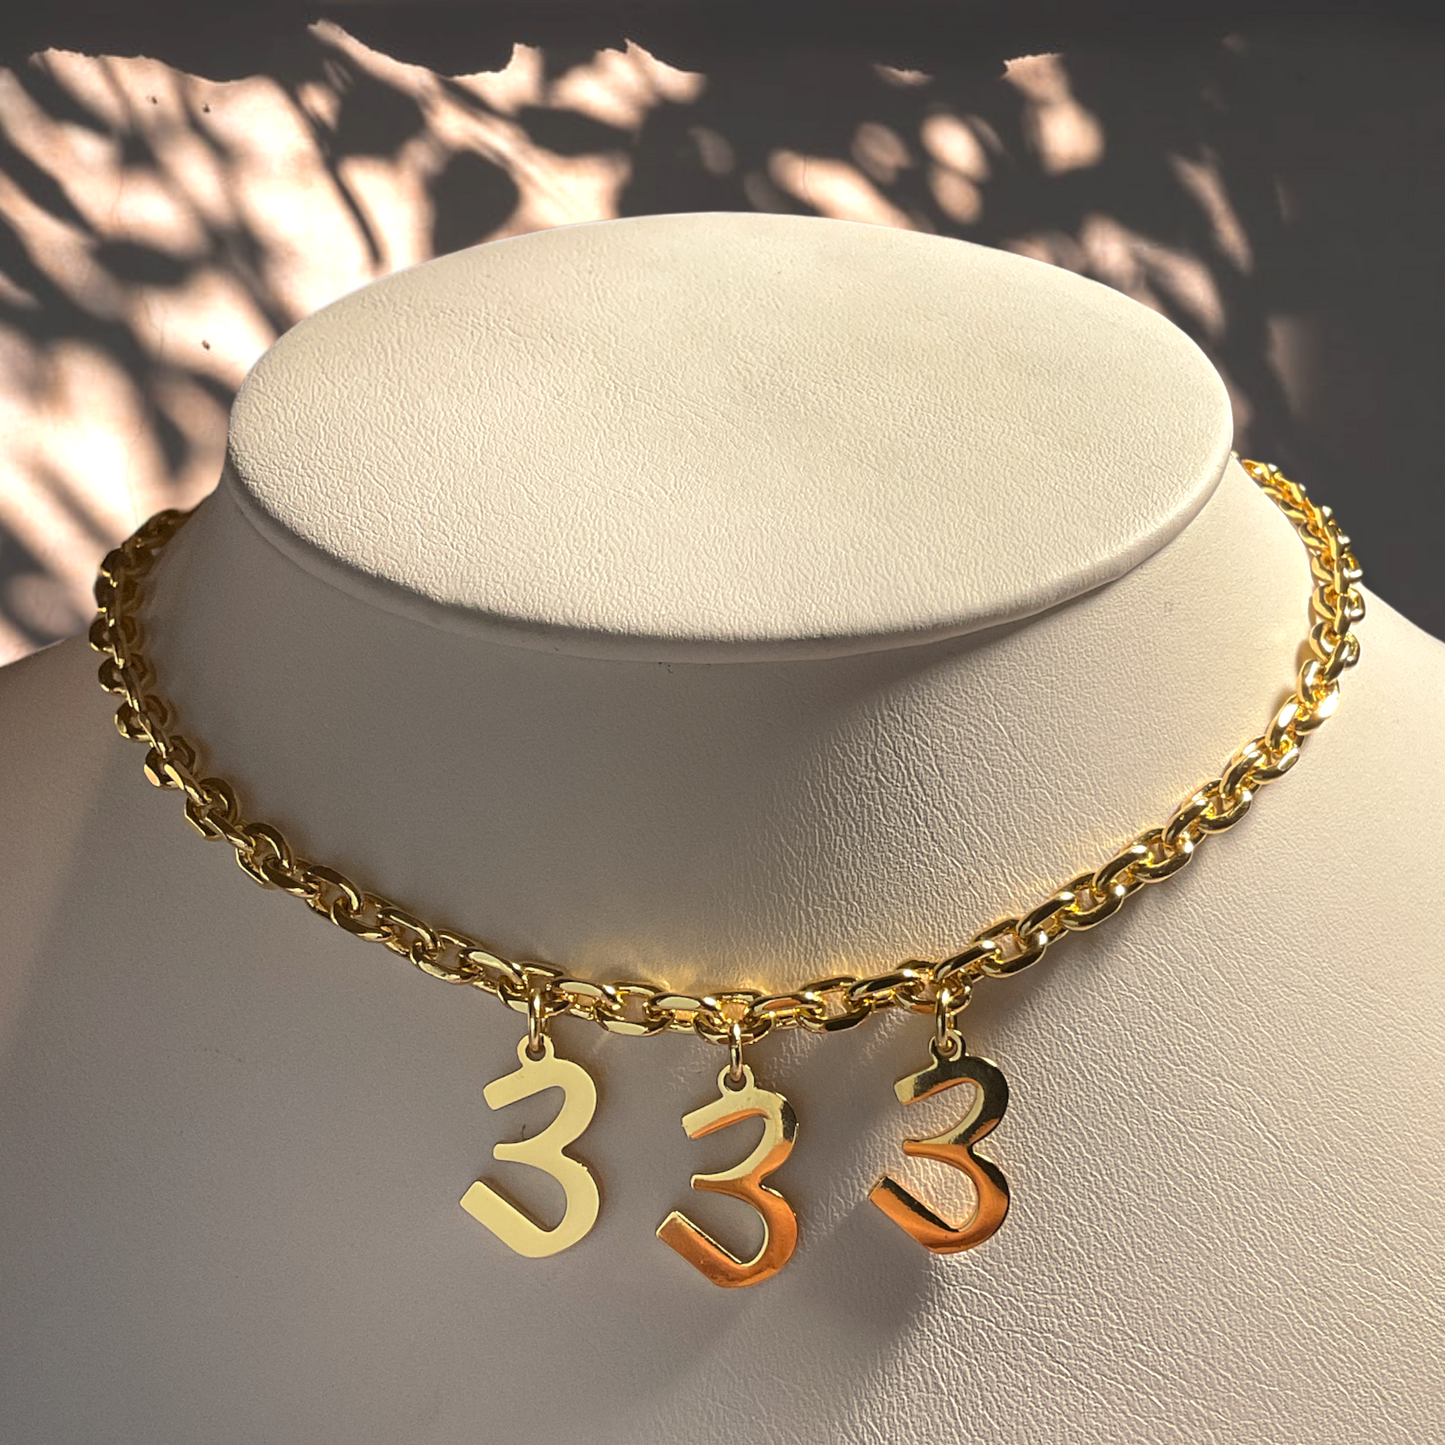 333 Angel number necklace with 18k gold plating, 18k gold plated necklace, angel number necklace gold, gold 333 angel number necklace, angel number jewelry, 333 necklace 